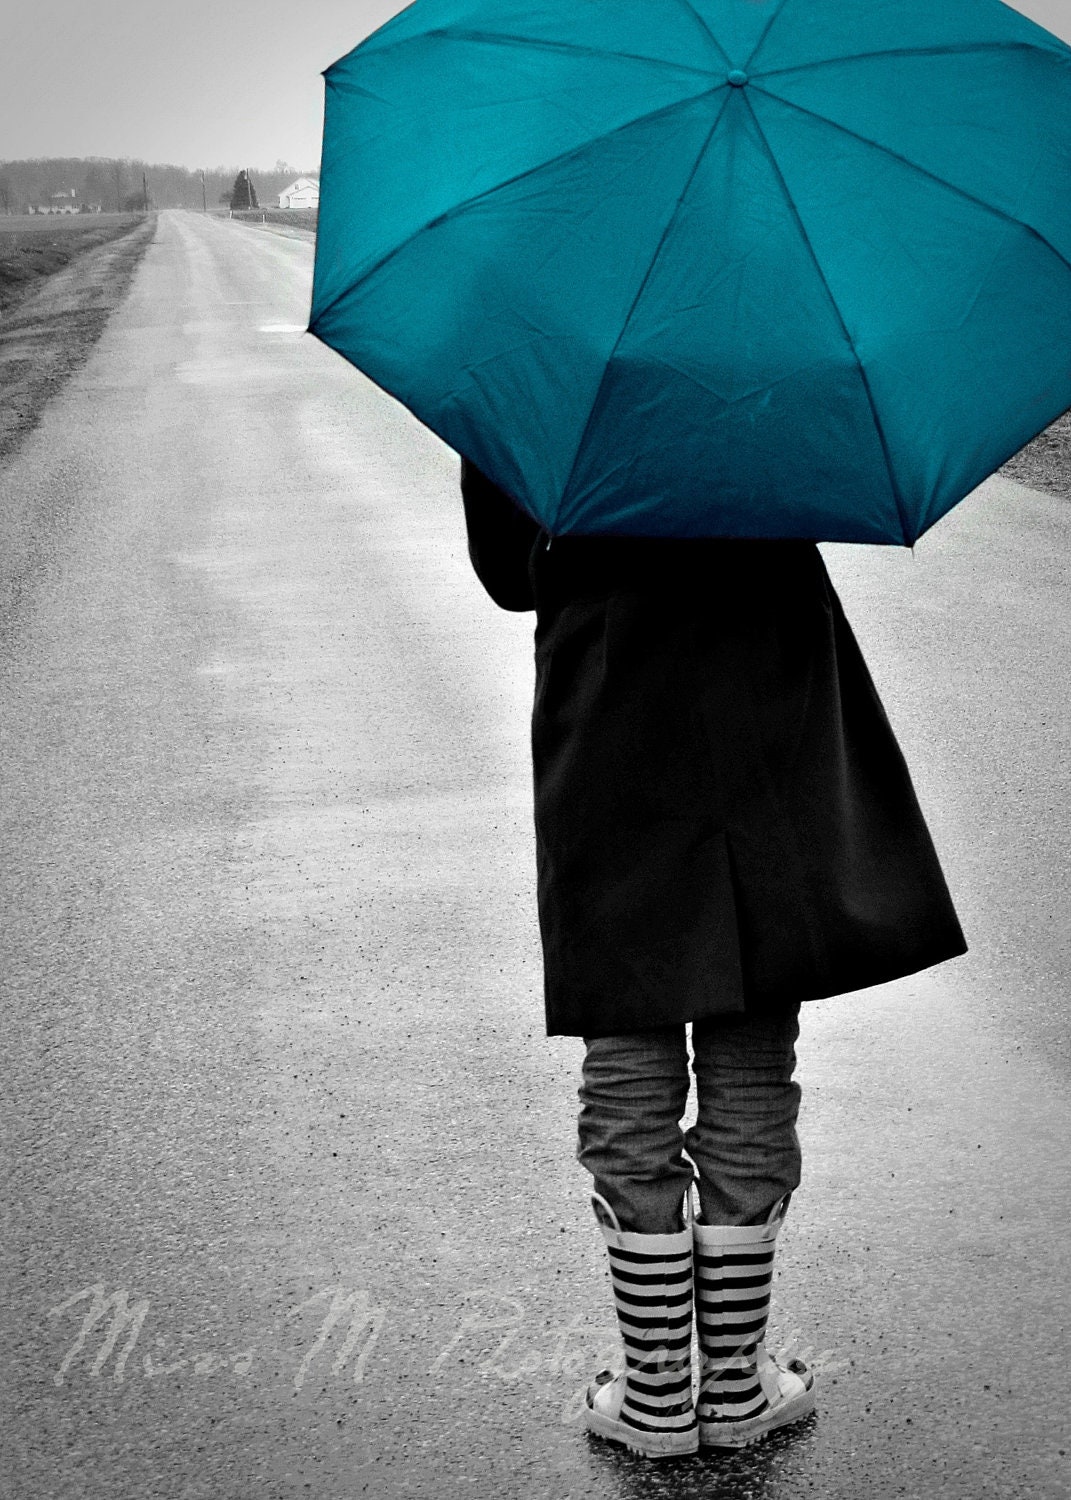 Teal, Turquoise Umbrella Walking in Rain Photograph - Home Decor - Long Walk Home - Original Fine Art Photograph - 5x7 Print - MissMPhotography